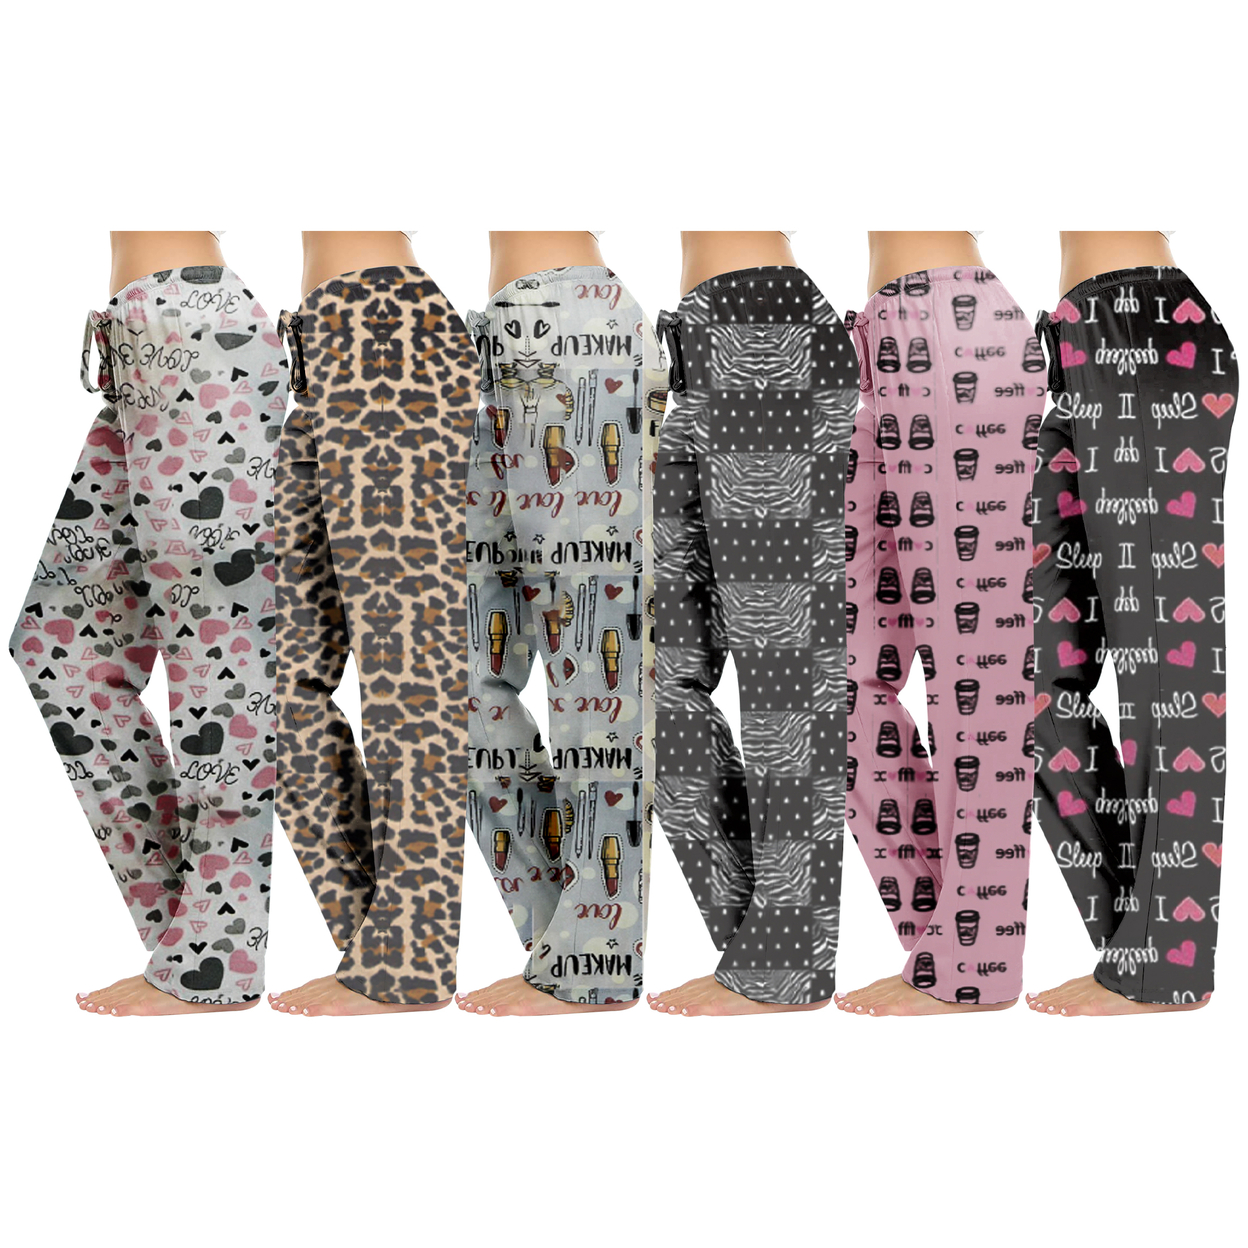 3-Pack: Women's Casual Fun Printed Lightweight Lounge Terry Knit Pajama Bottom Pants - Medium, Love